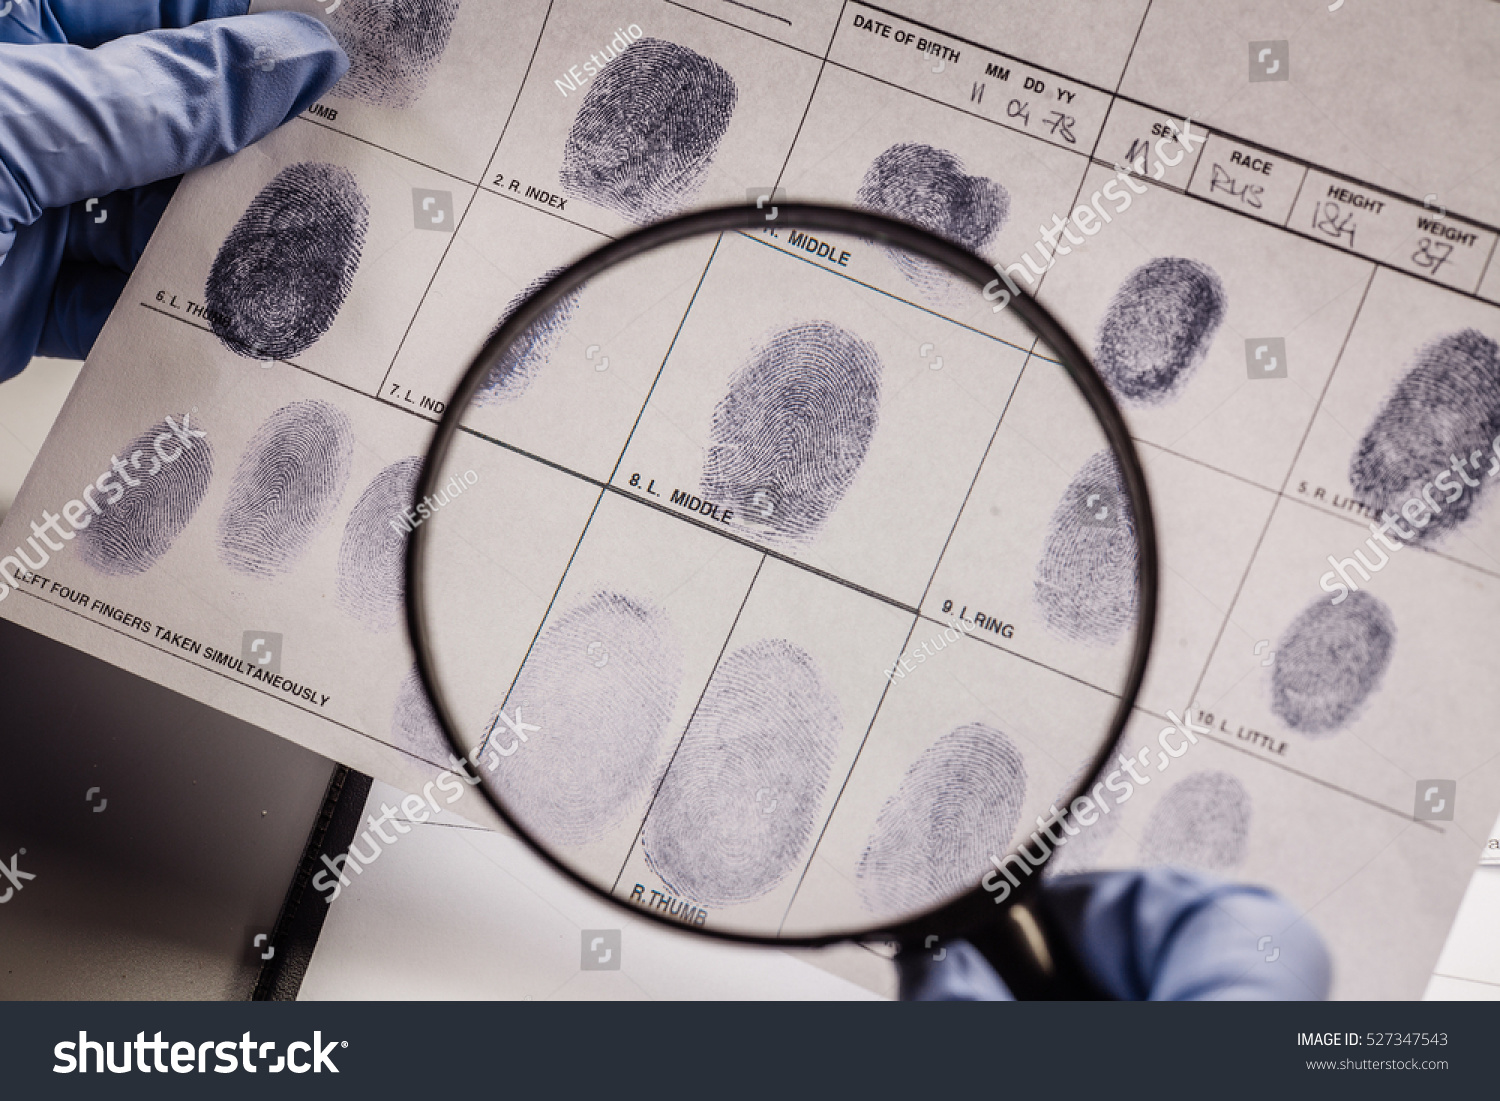 Criminology expert through a magnifying glass looking at a fingerprint #527347543